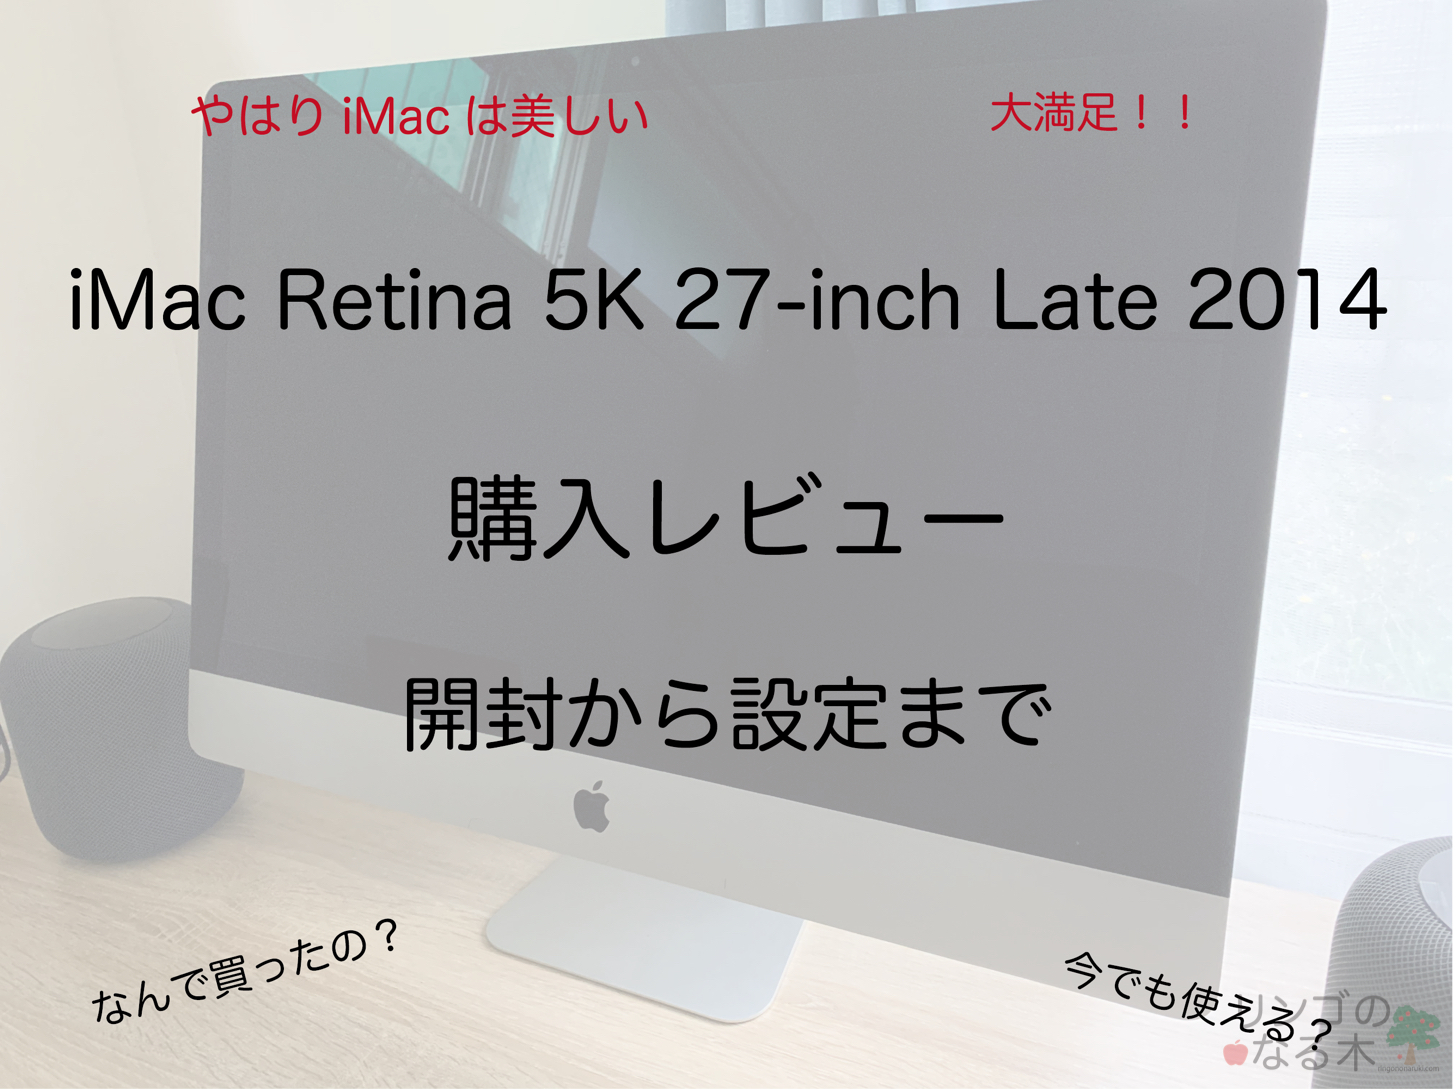 iMac Retina 5K 27-inch Late 2014 を購入！開封から設定までの備忘録(2020年) | リンゴのなる木